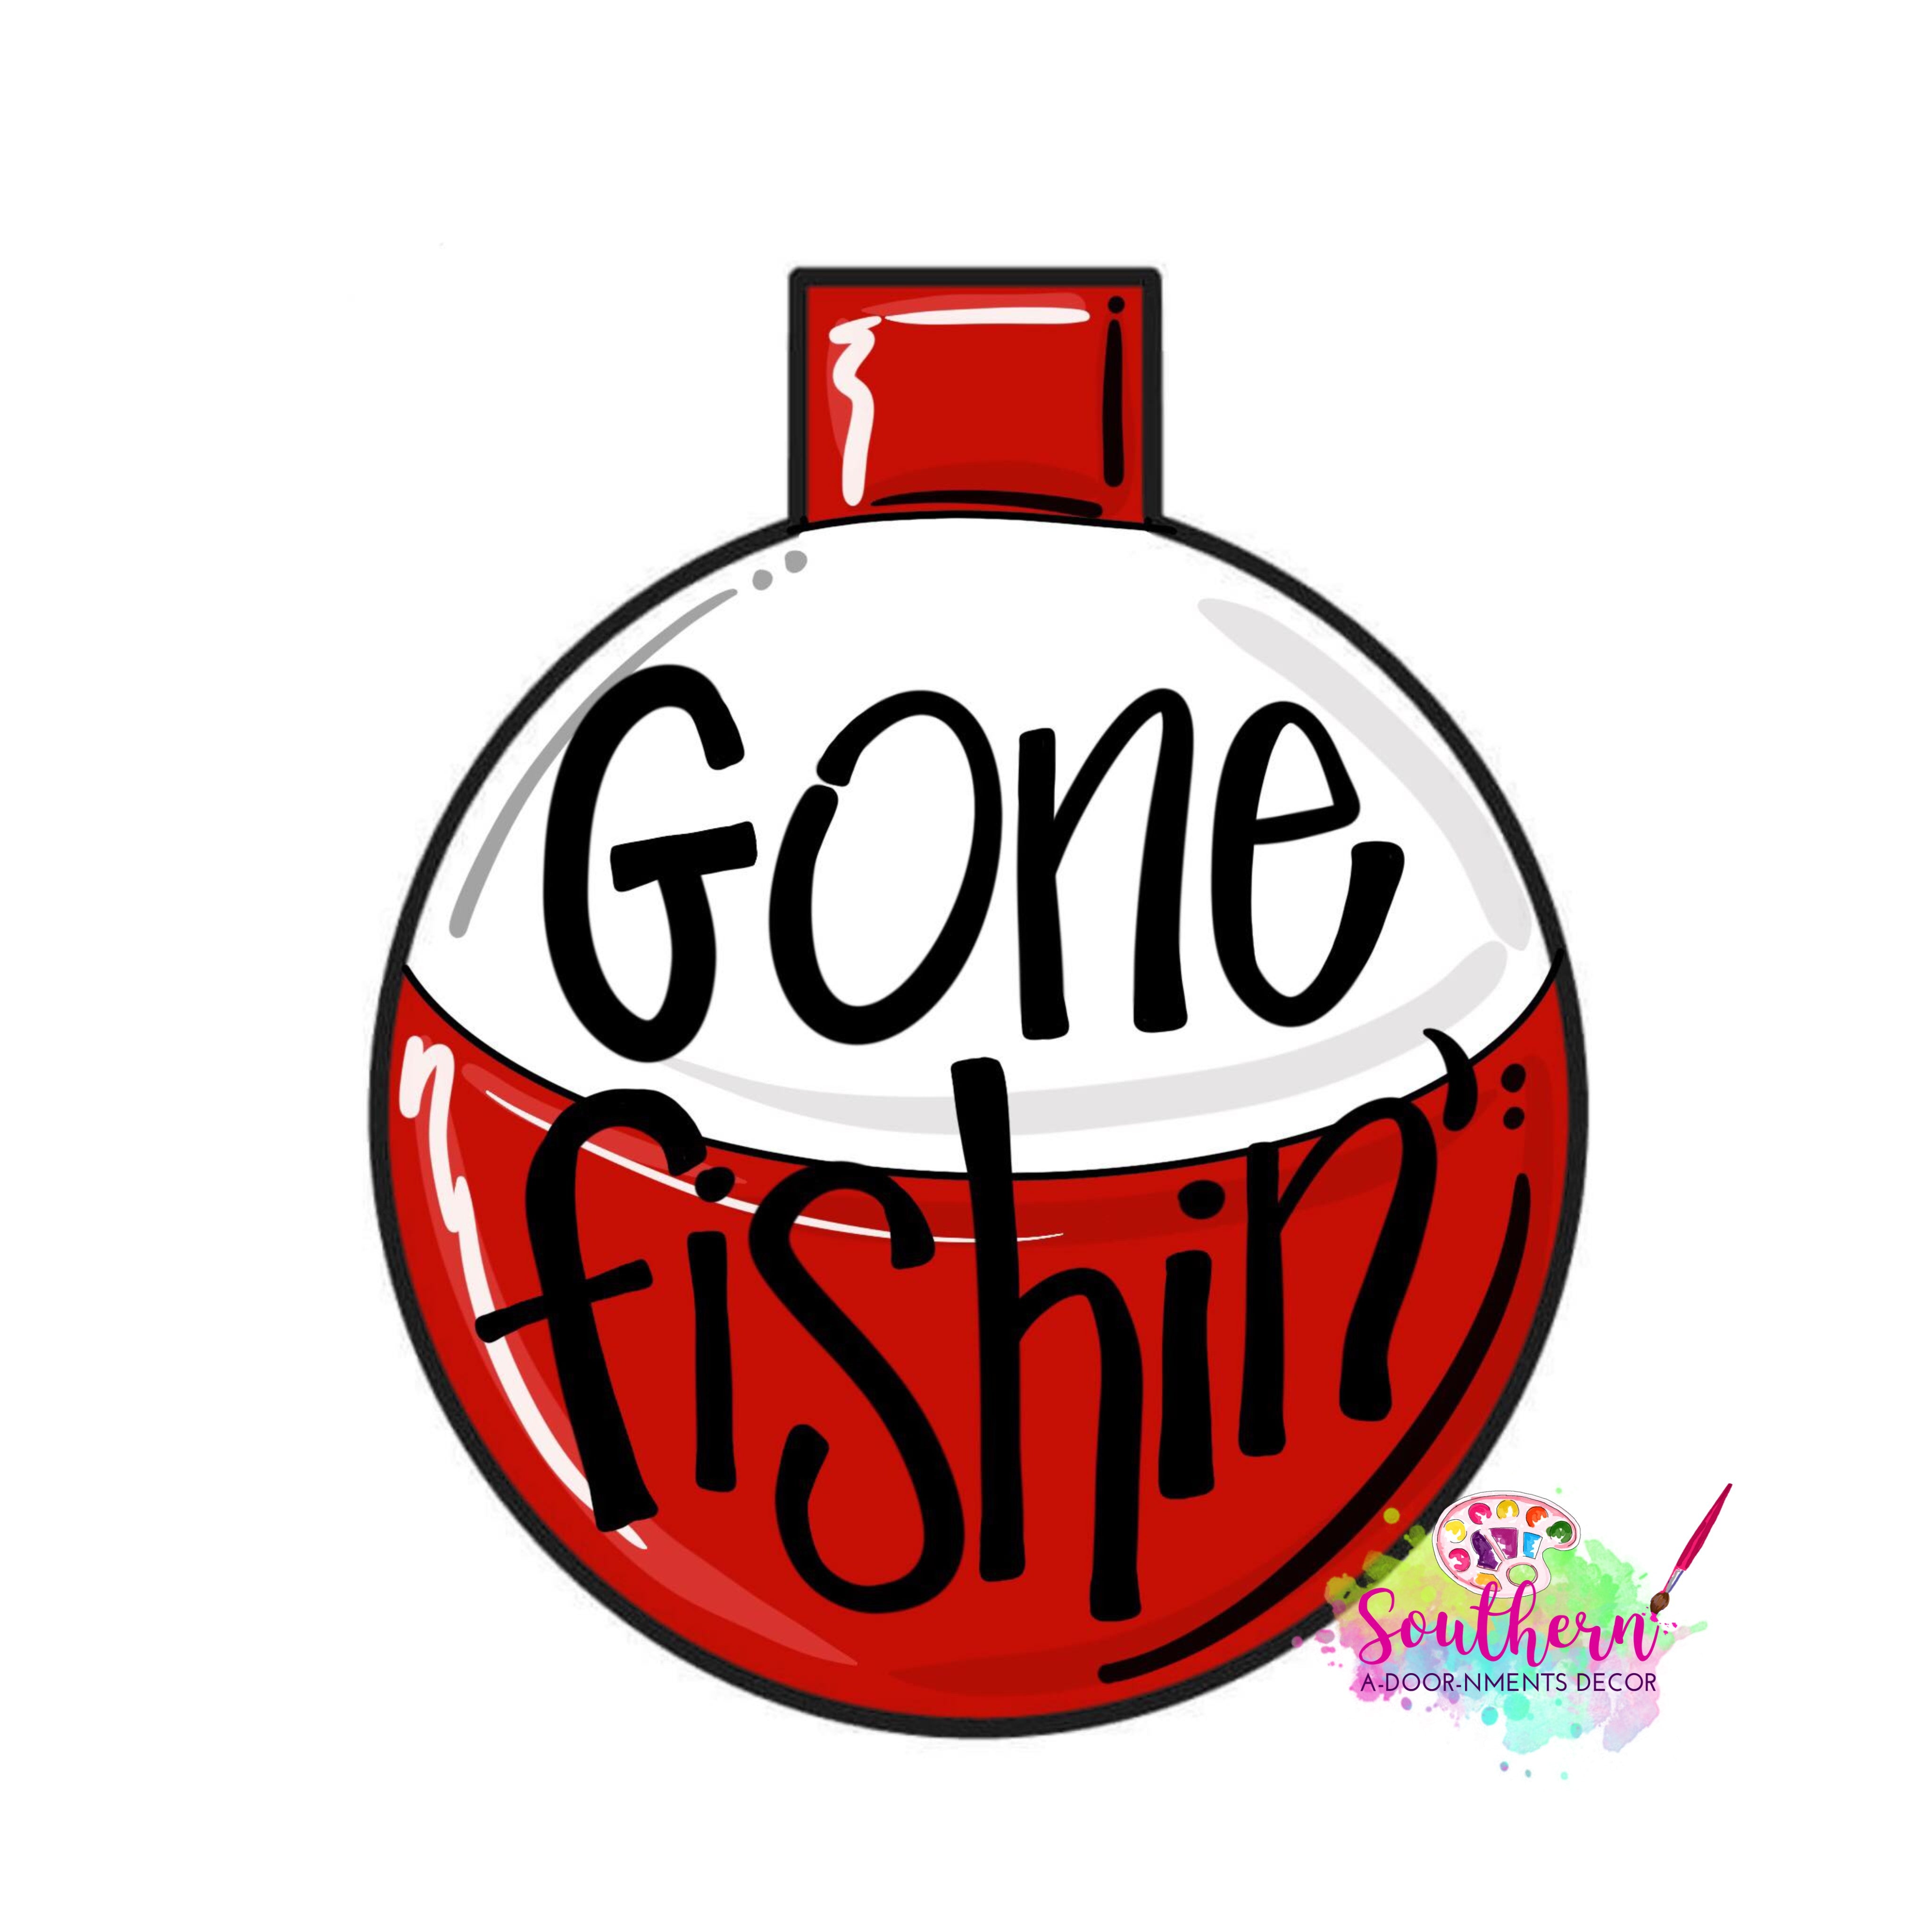 Gone Fishin' Template & Digital Cut File